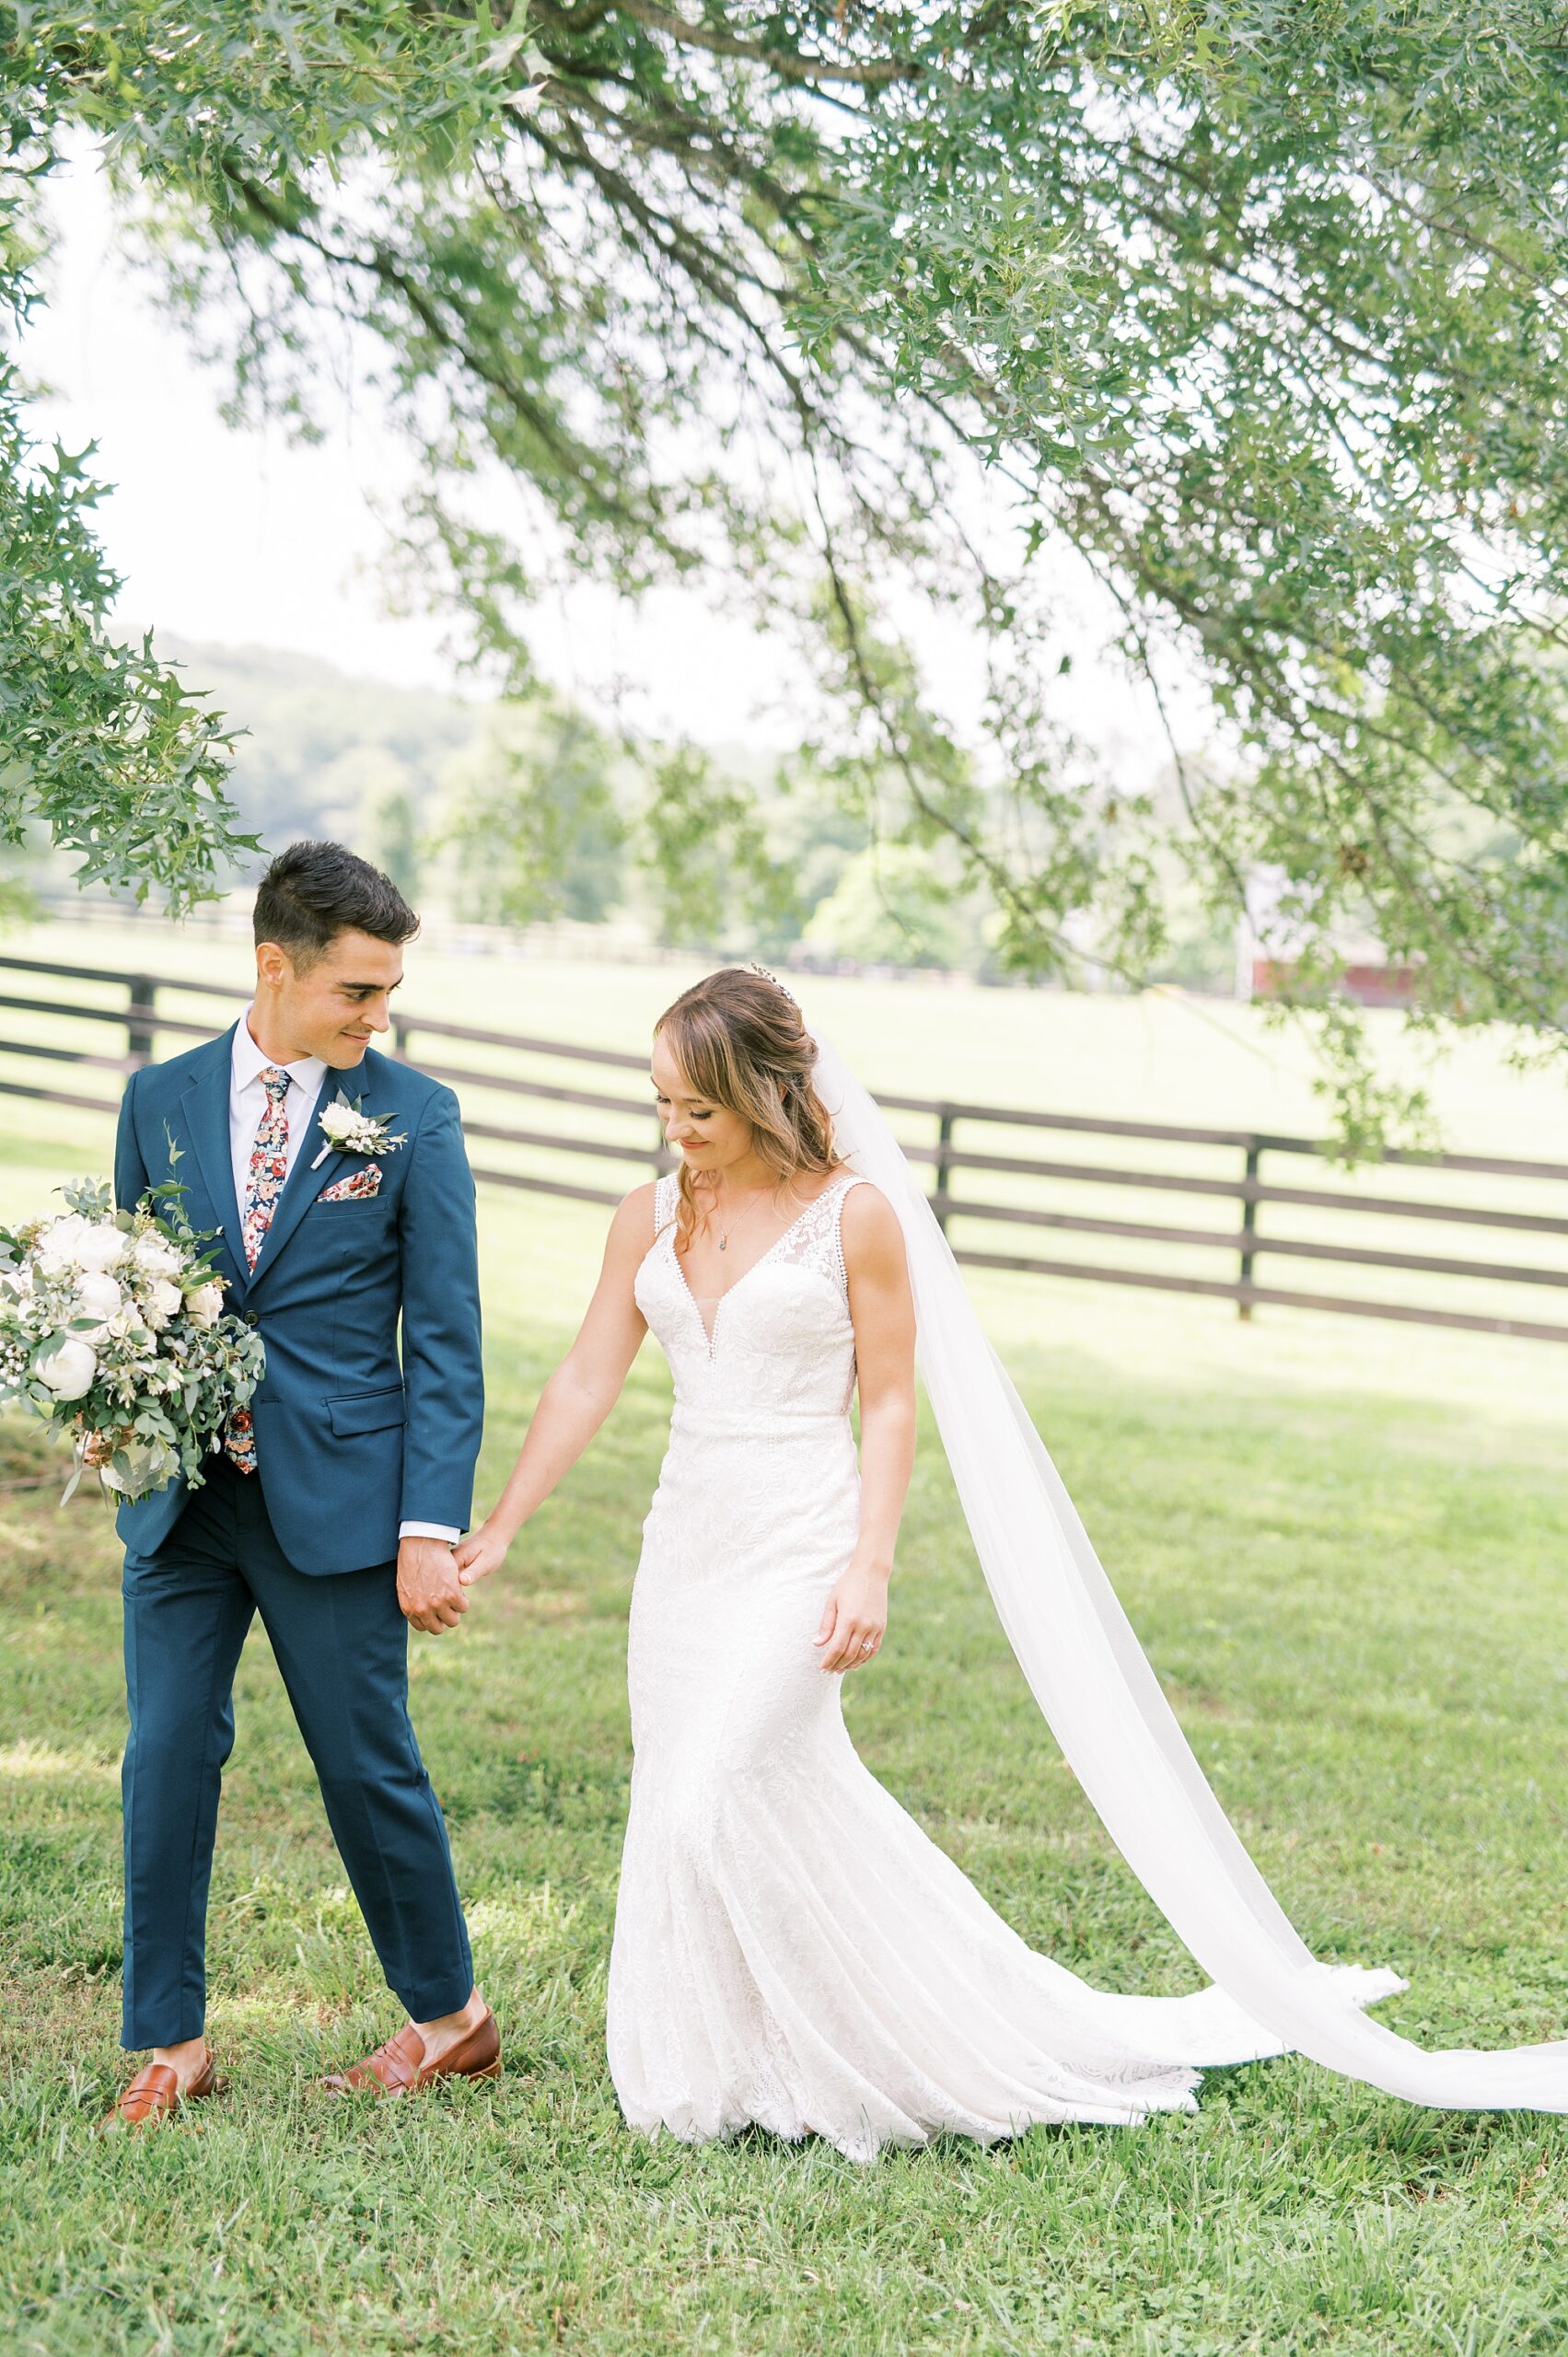 Cedarmont Farm Wedding portraits taken by Nashville wedding photographer Kera photography